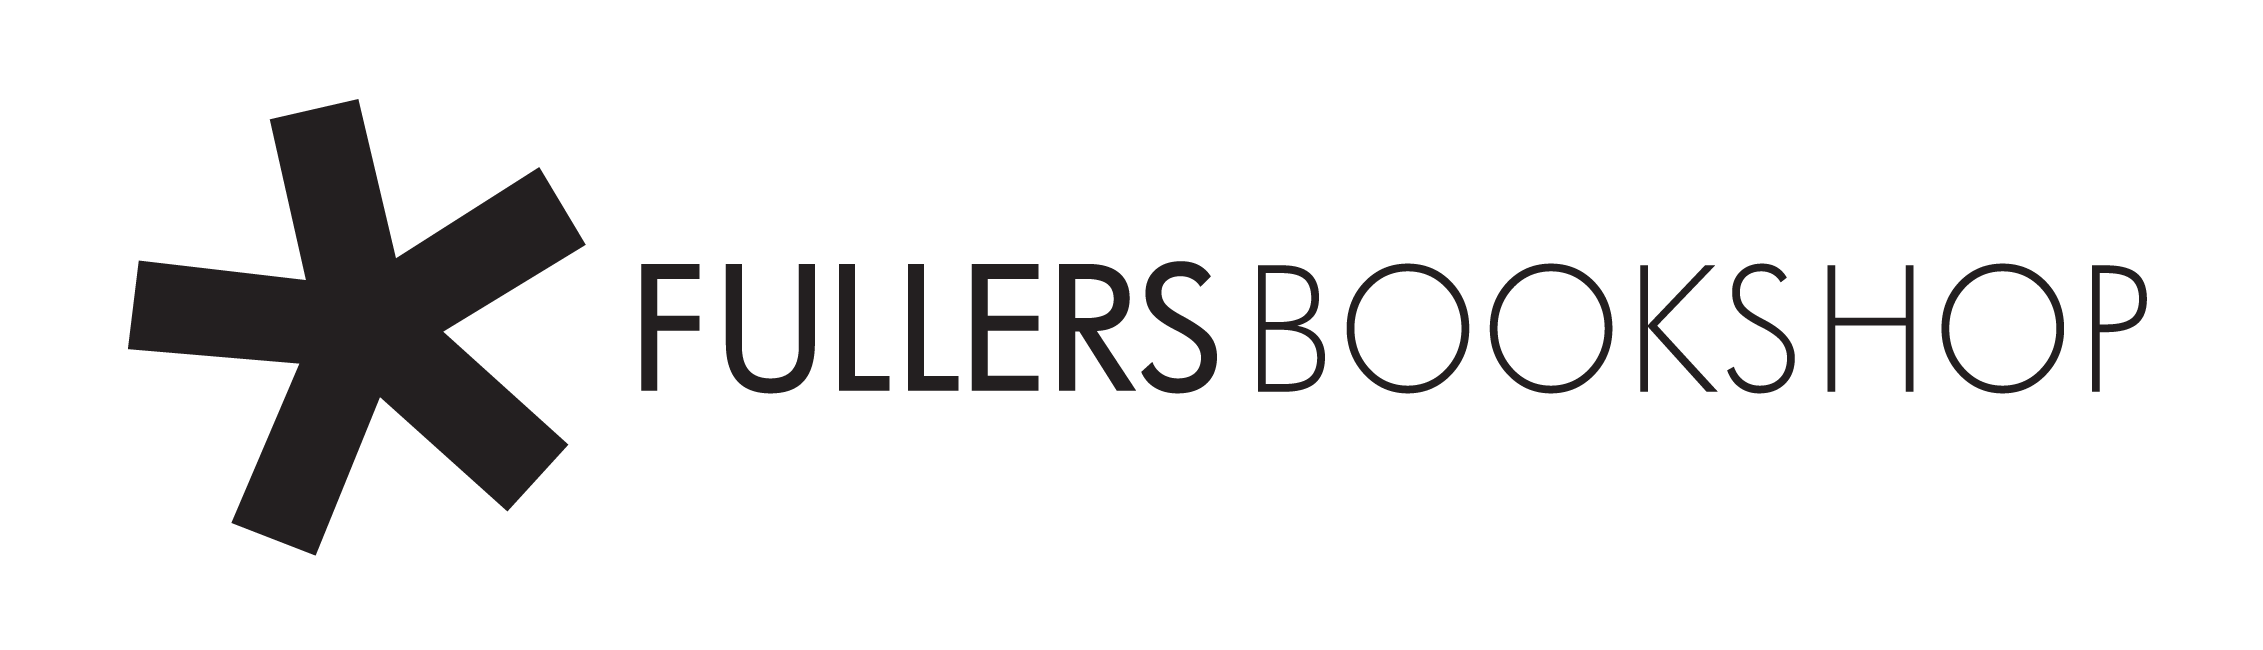 Fullers Bookshop